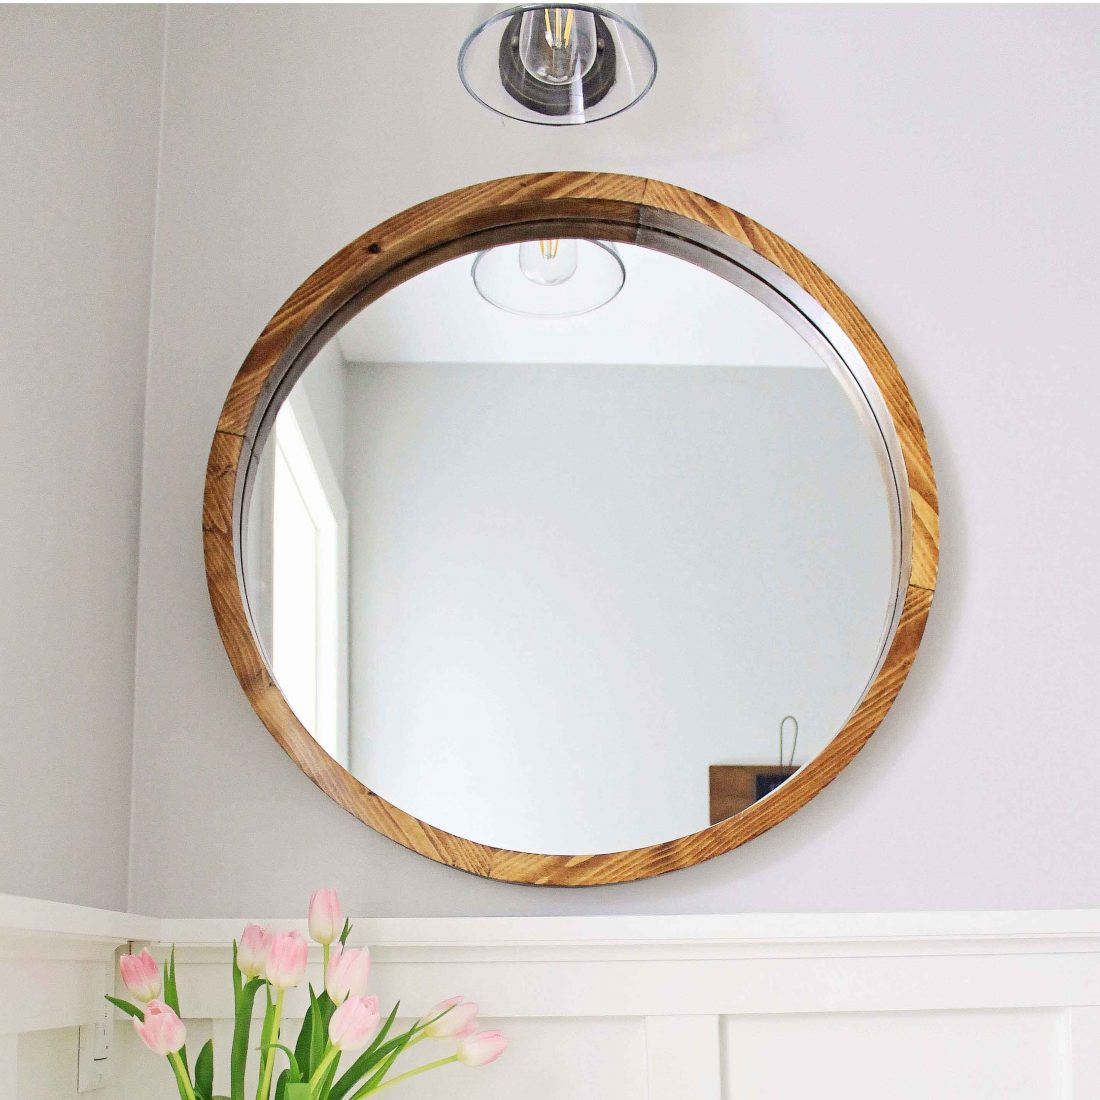 Round Wood Mirror DIY - Angela Marie Made